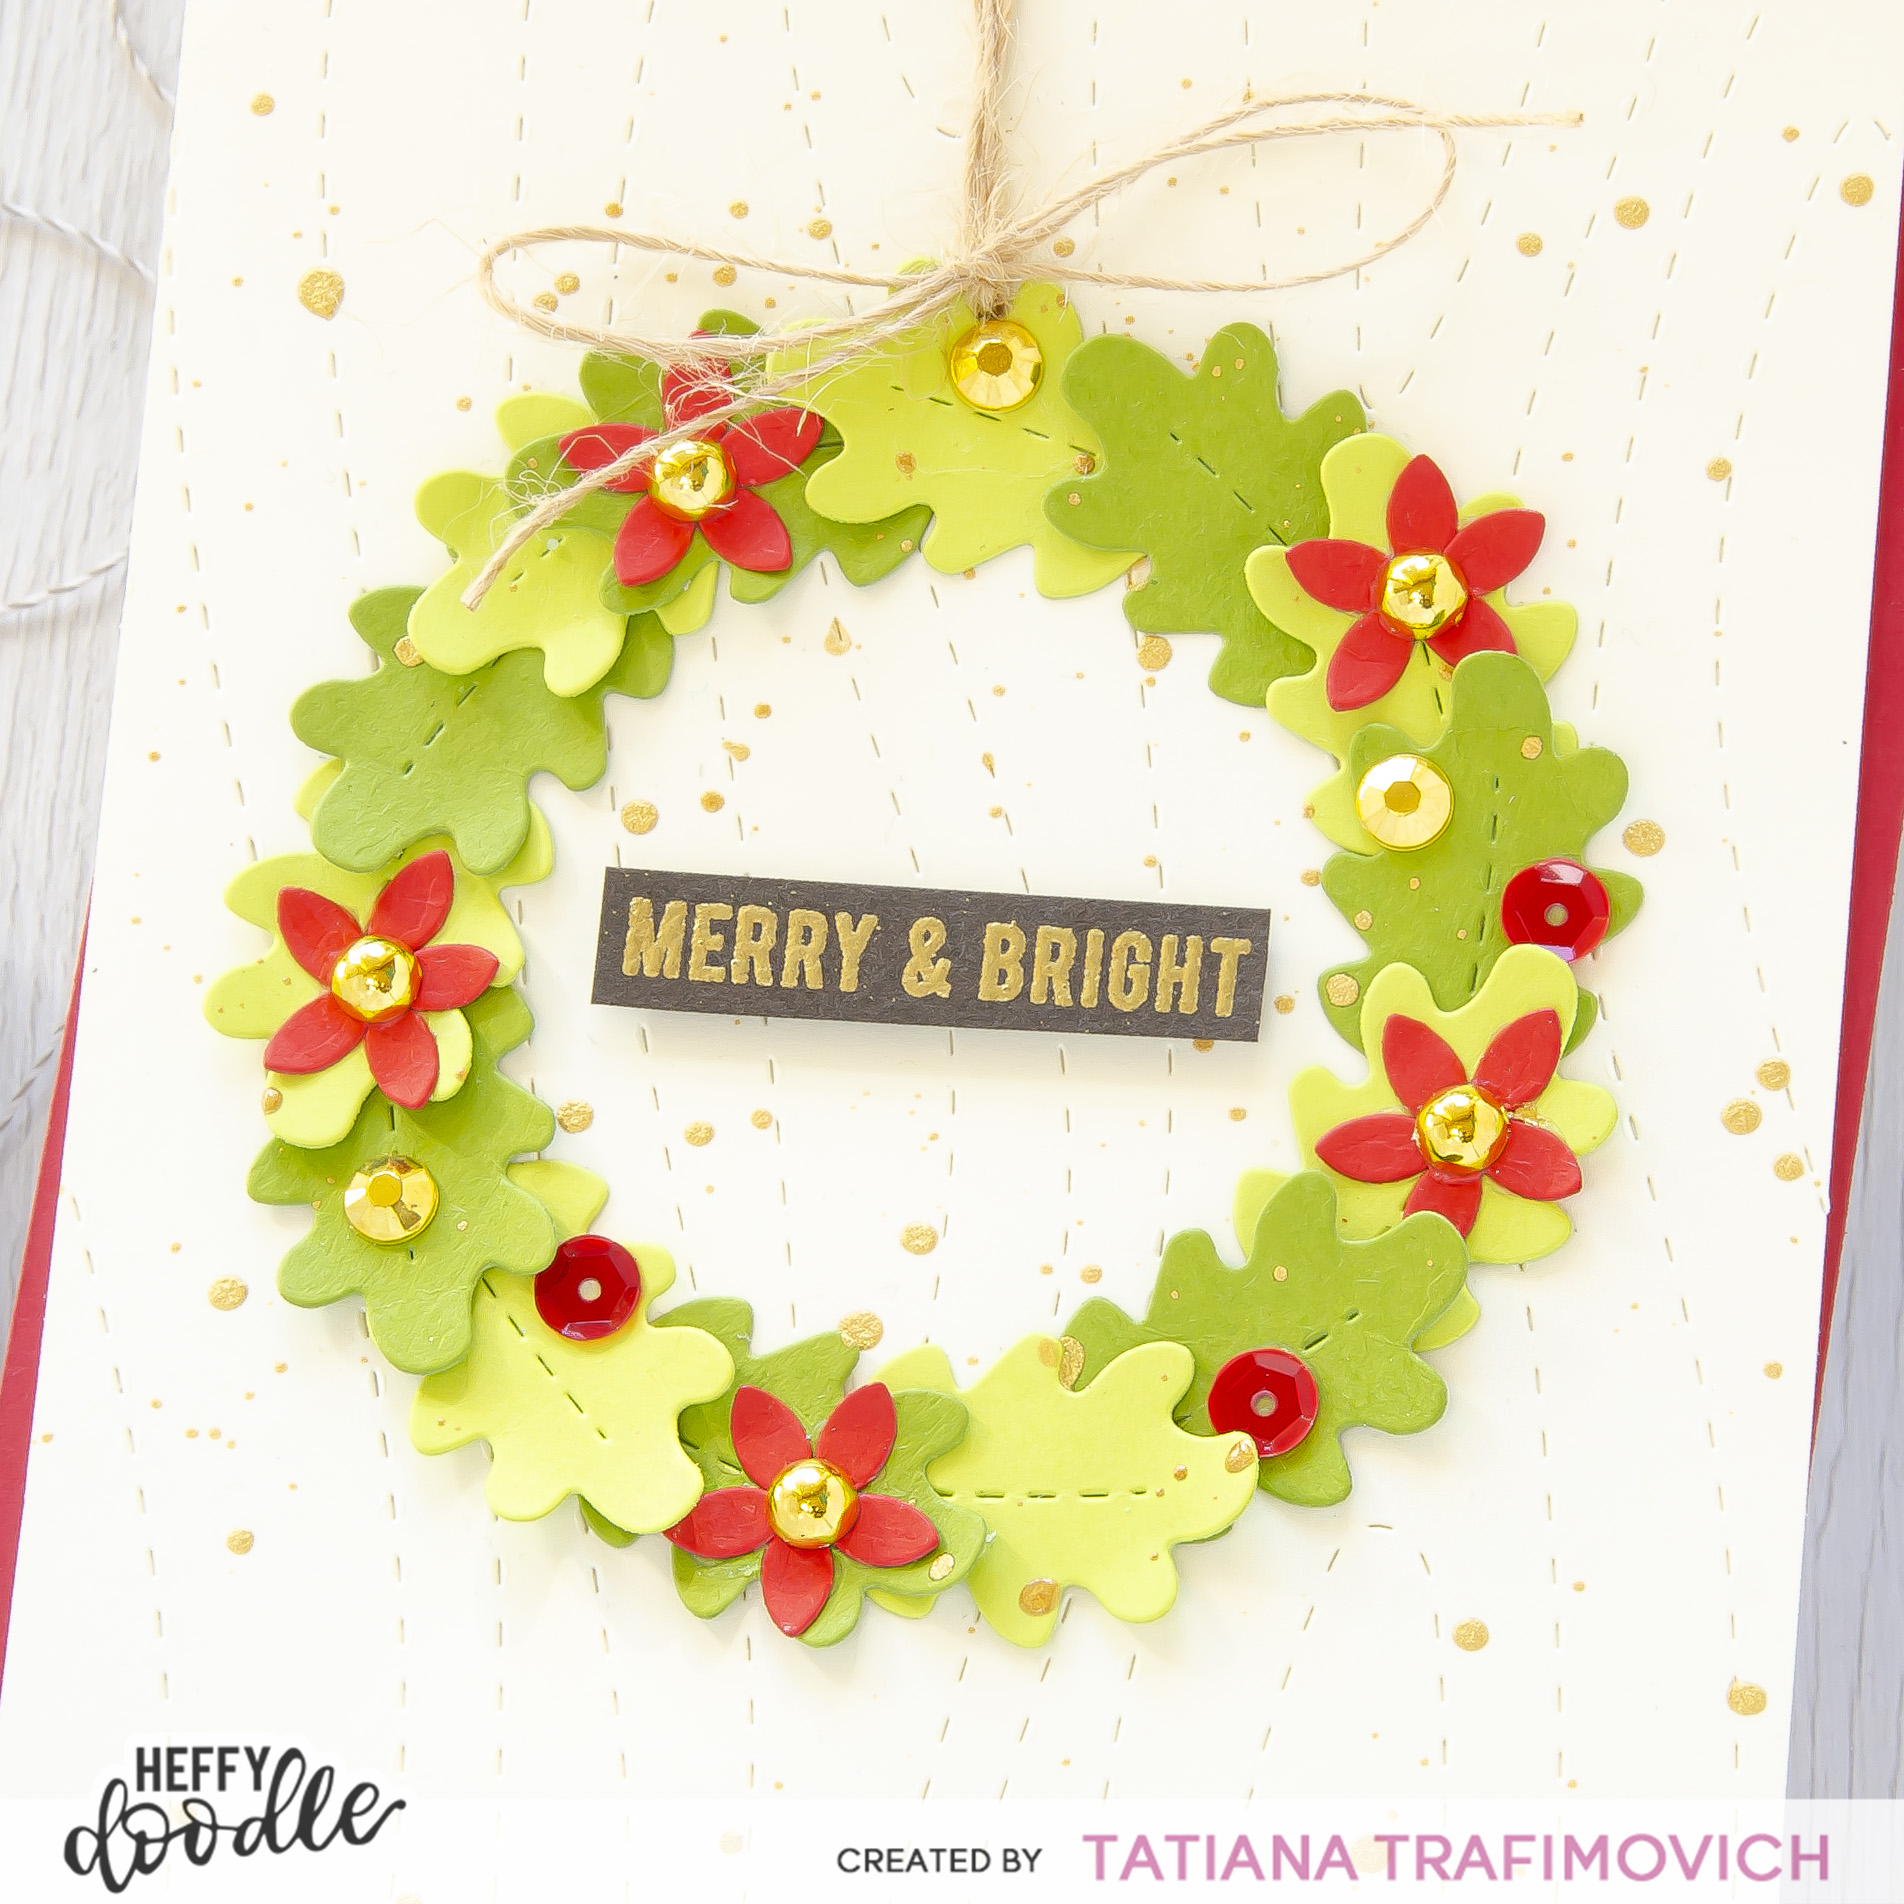 Merry & Bright #handmade card by Tatiana Trafimovich #tatianacraftandart - Forest Leaves Dies by Heffy Doodle #heffydoodle